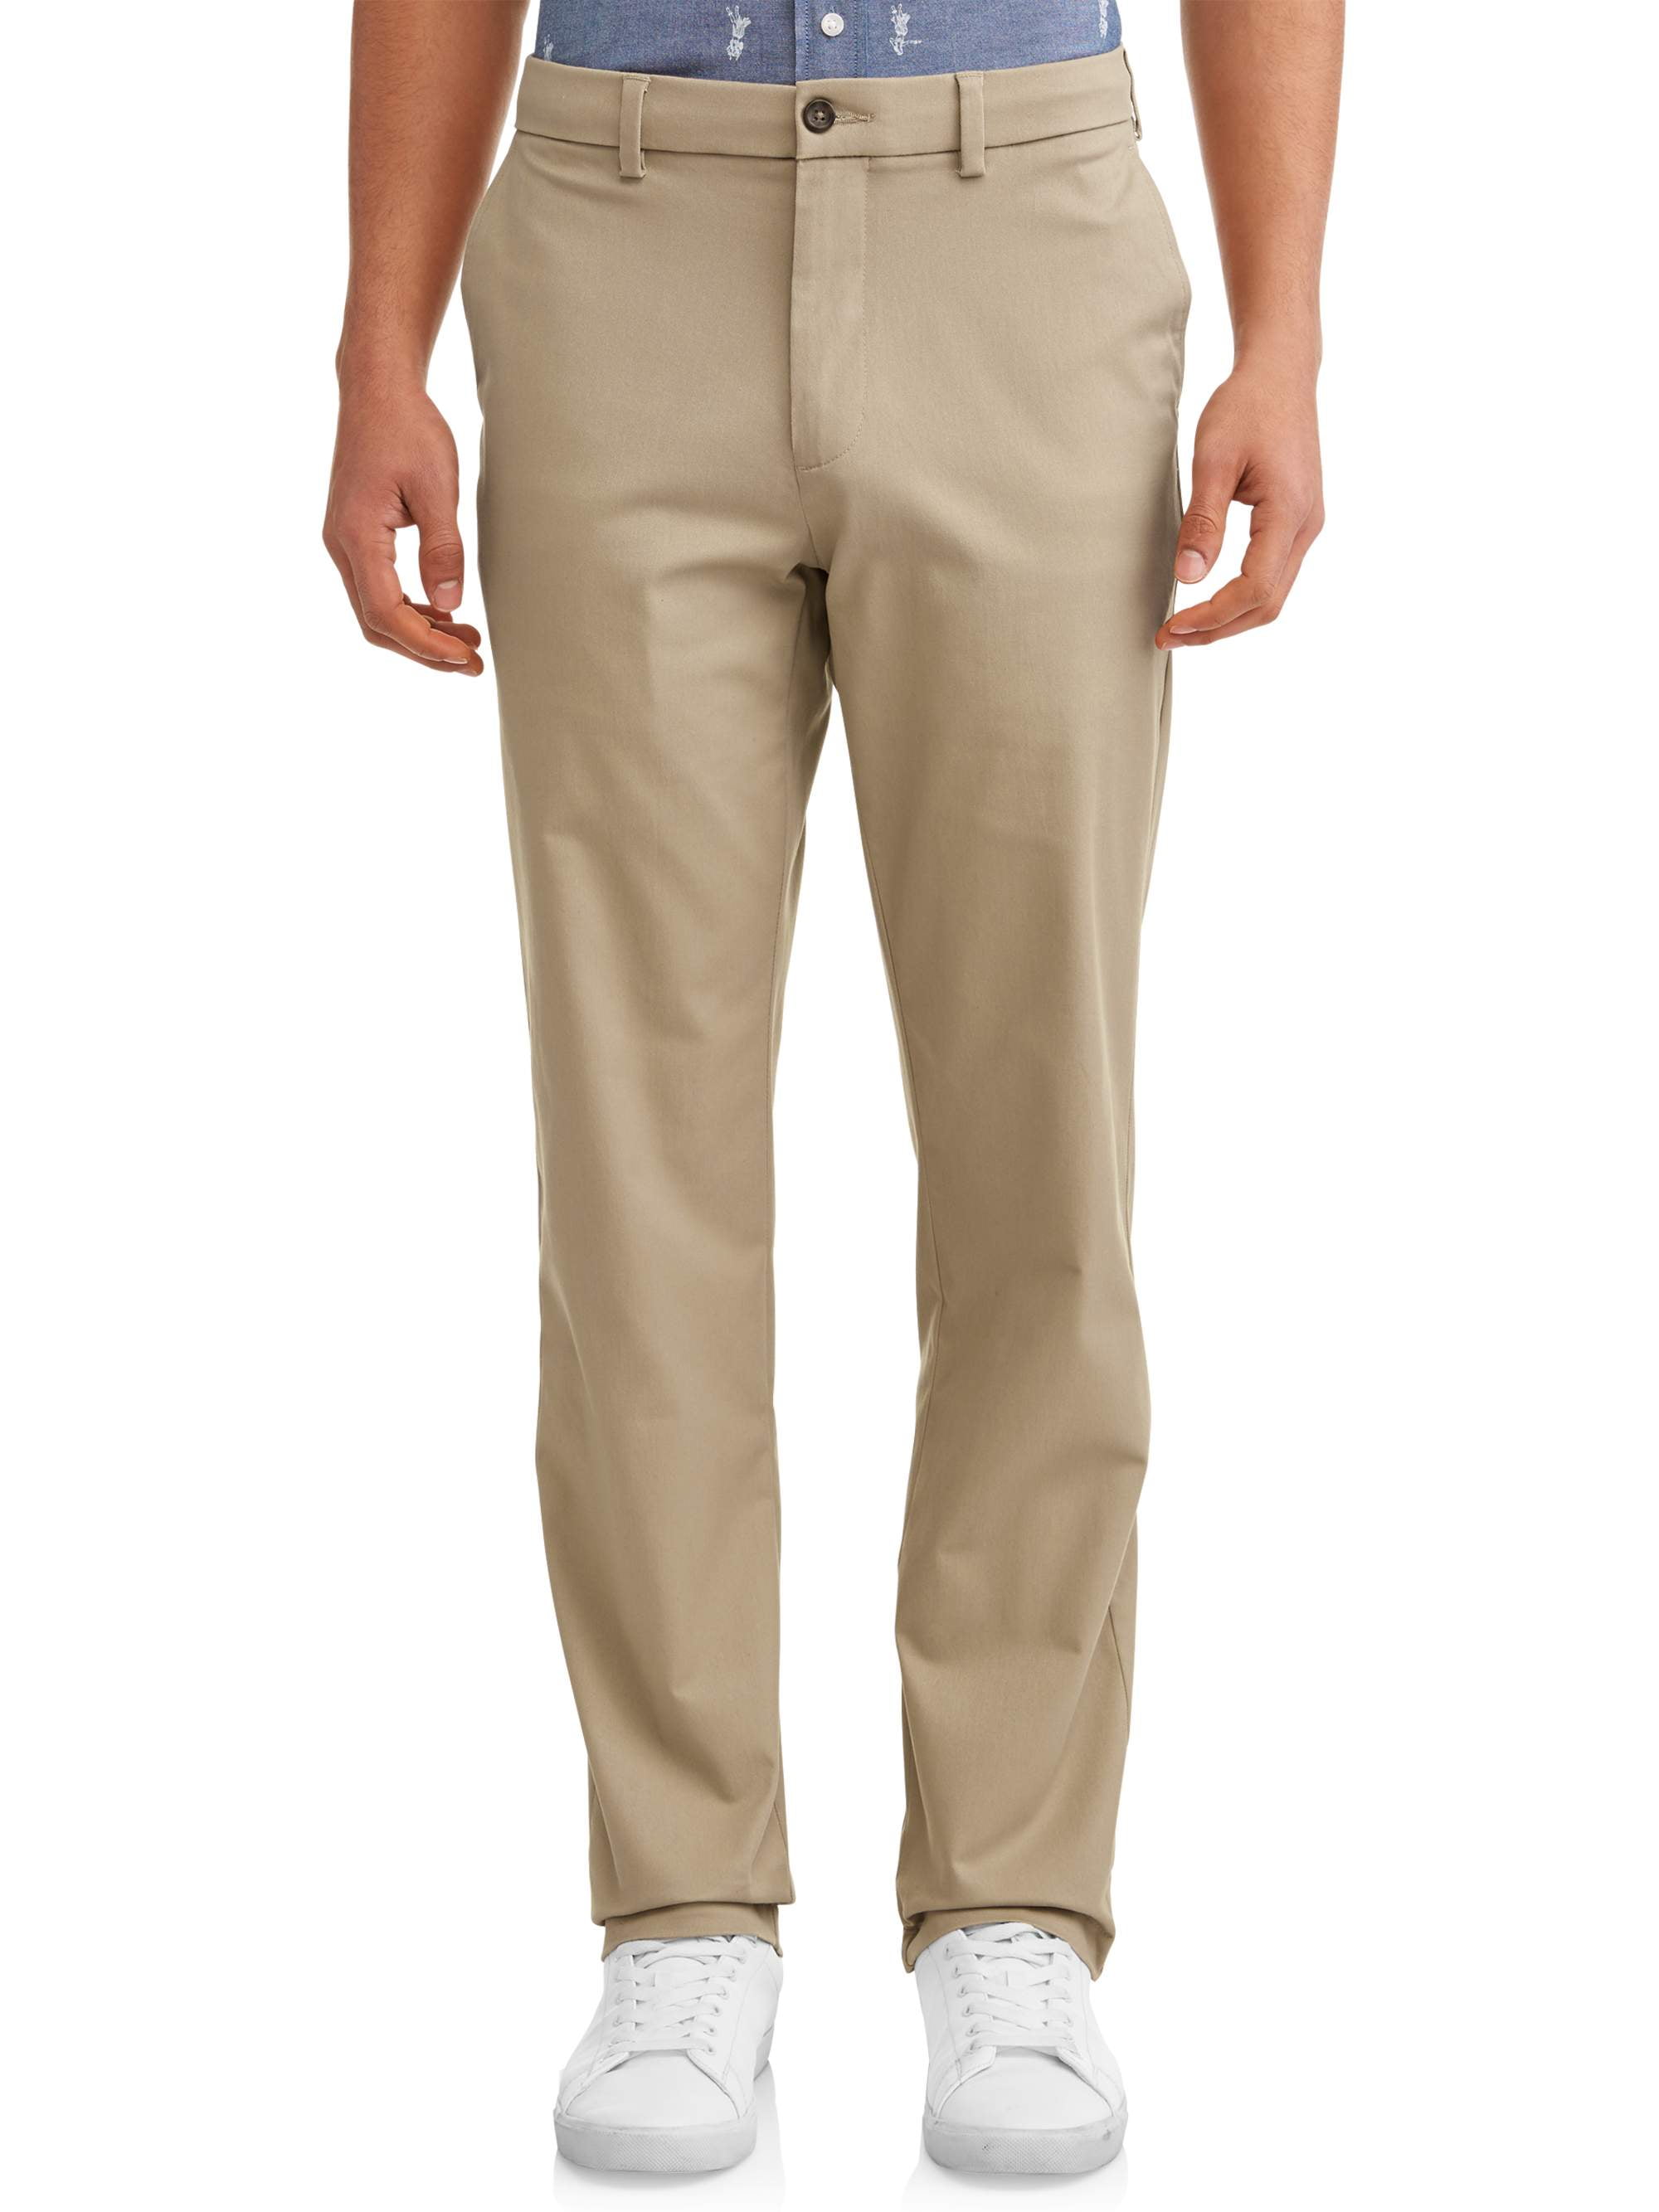 George Men's Premium Straight Fit Khaki Pants - Walmart.com